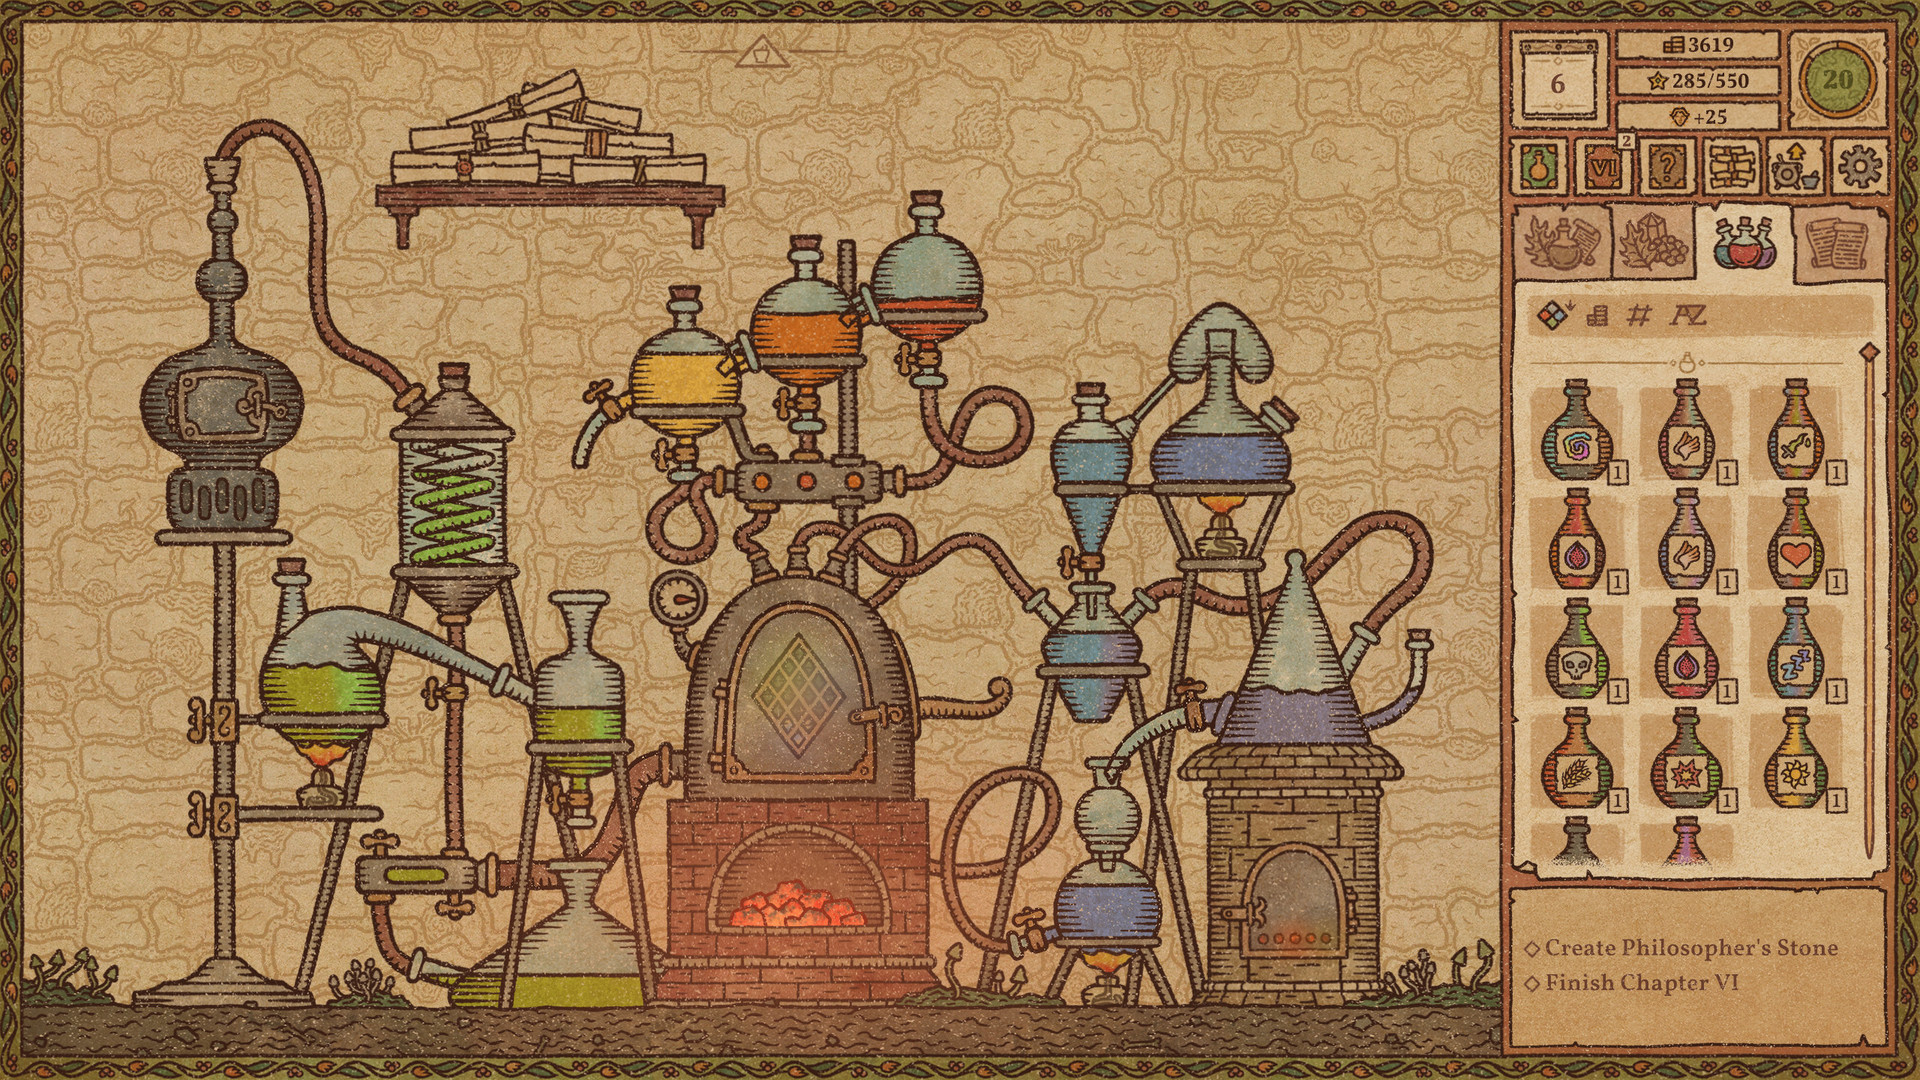 Potion Craft: Alchemist Simulator Steam CD Key